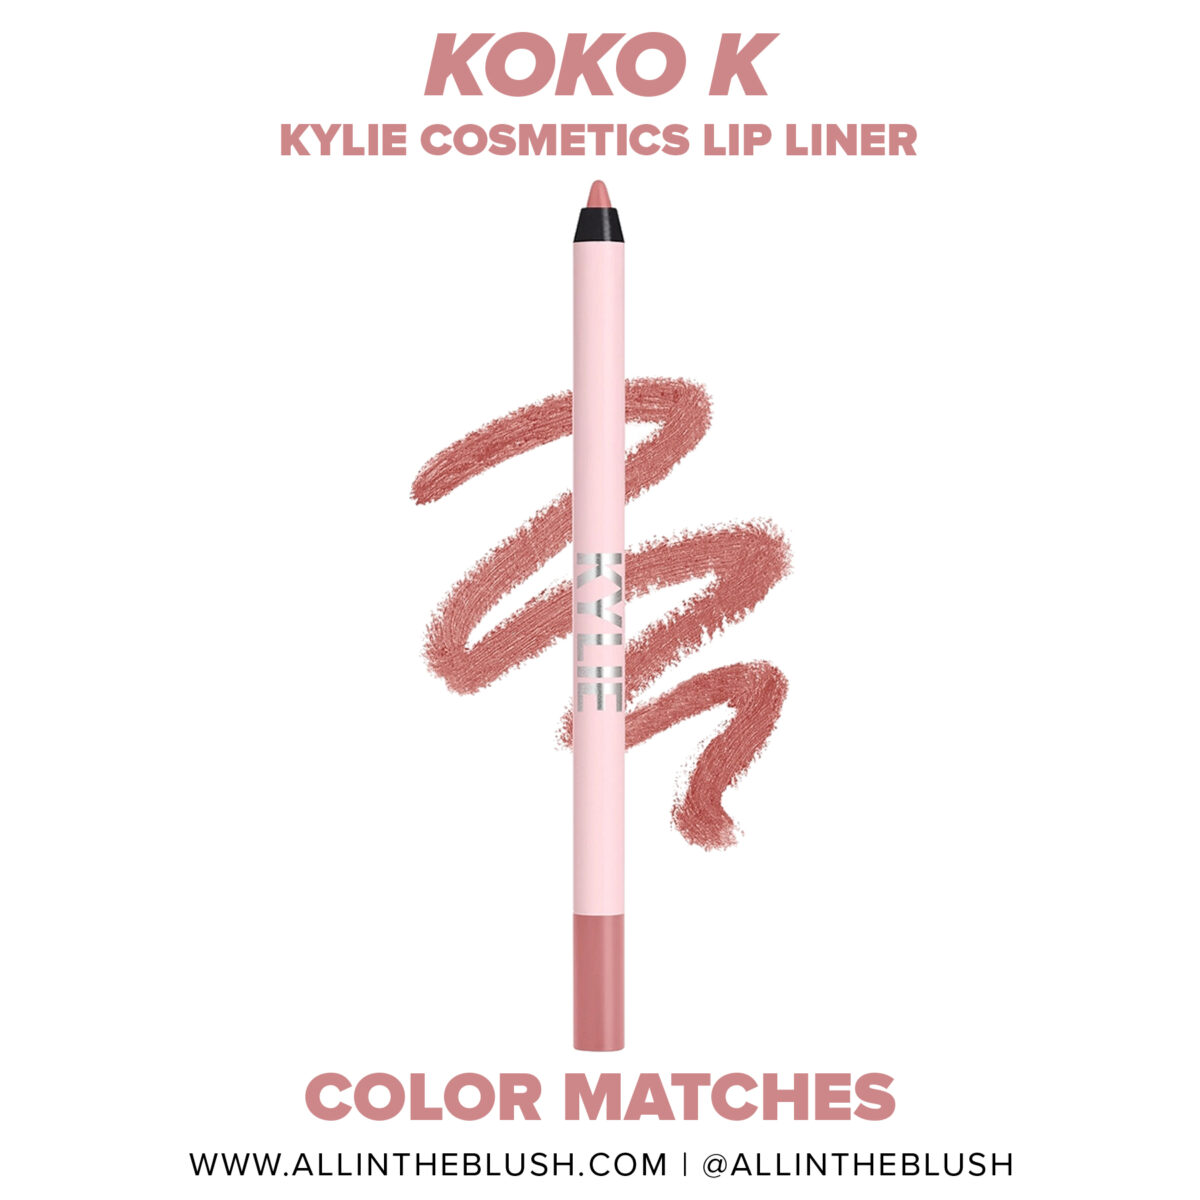 Kylie Cosmetics Koko K Lip Liner Dupes